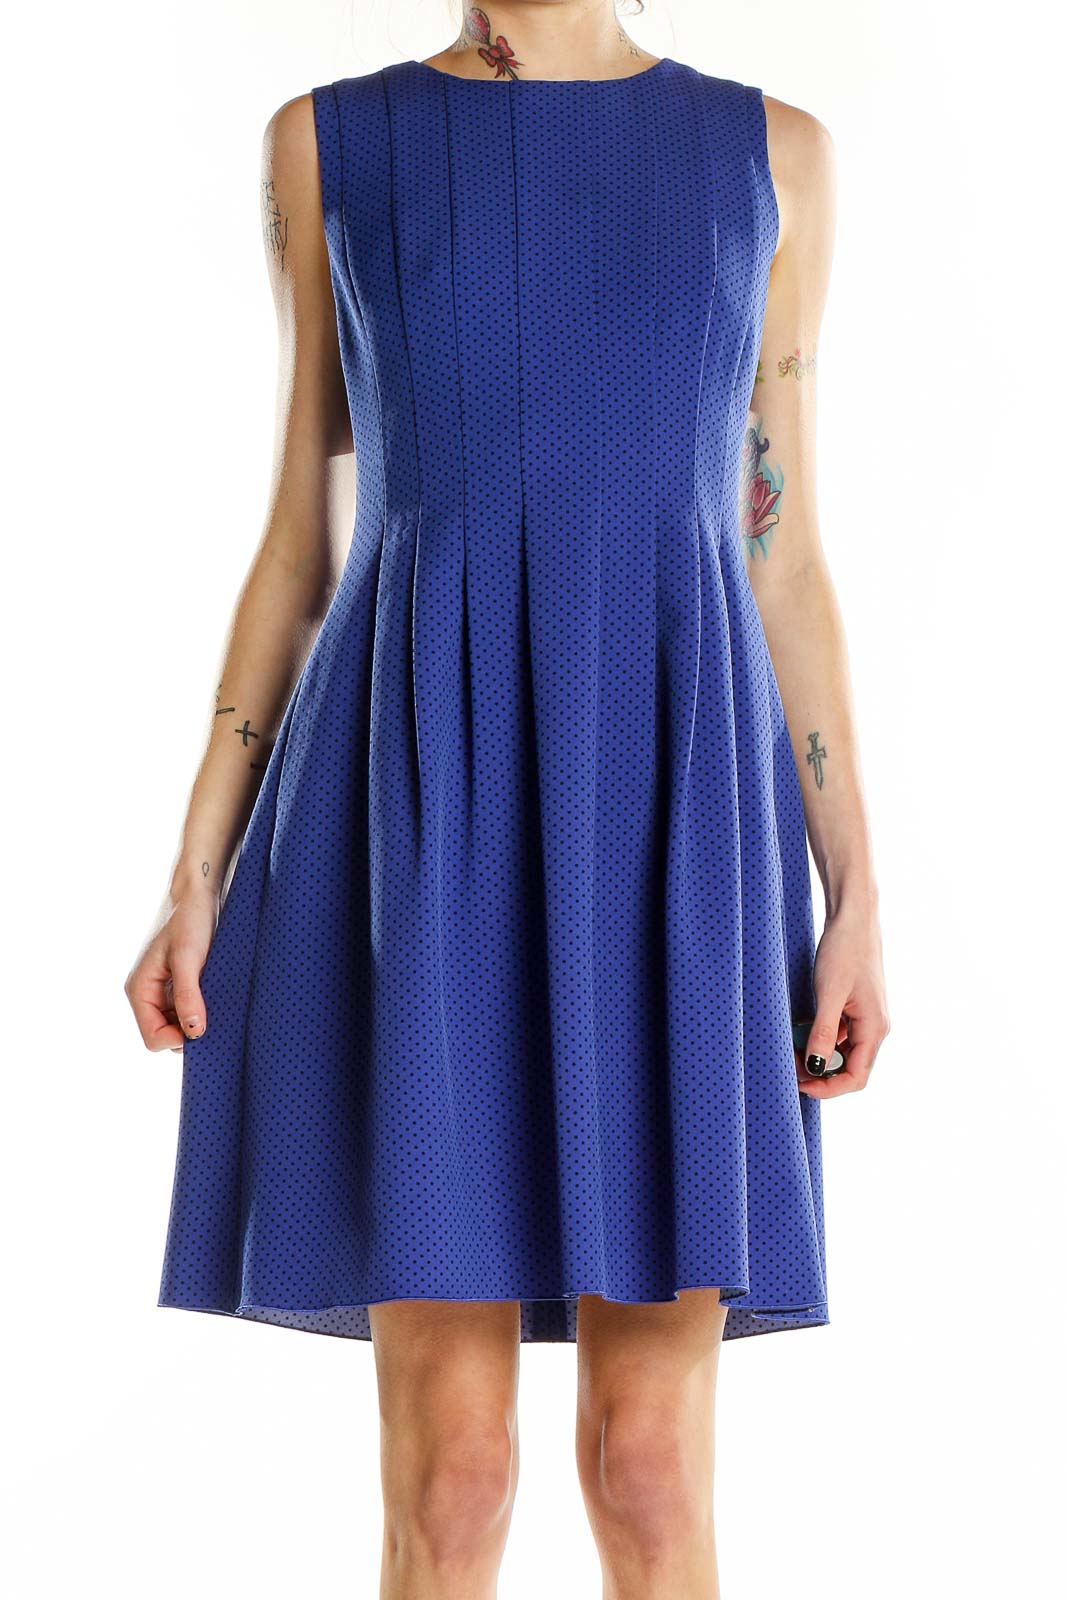 Blue Flare Dress Front